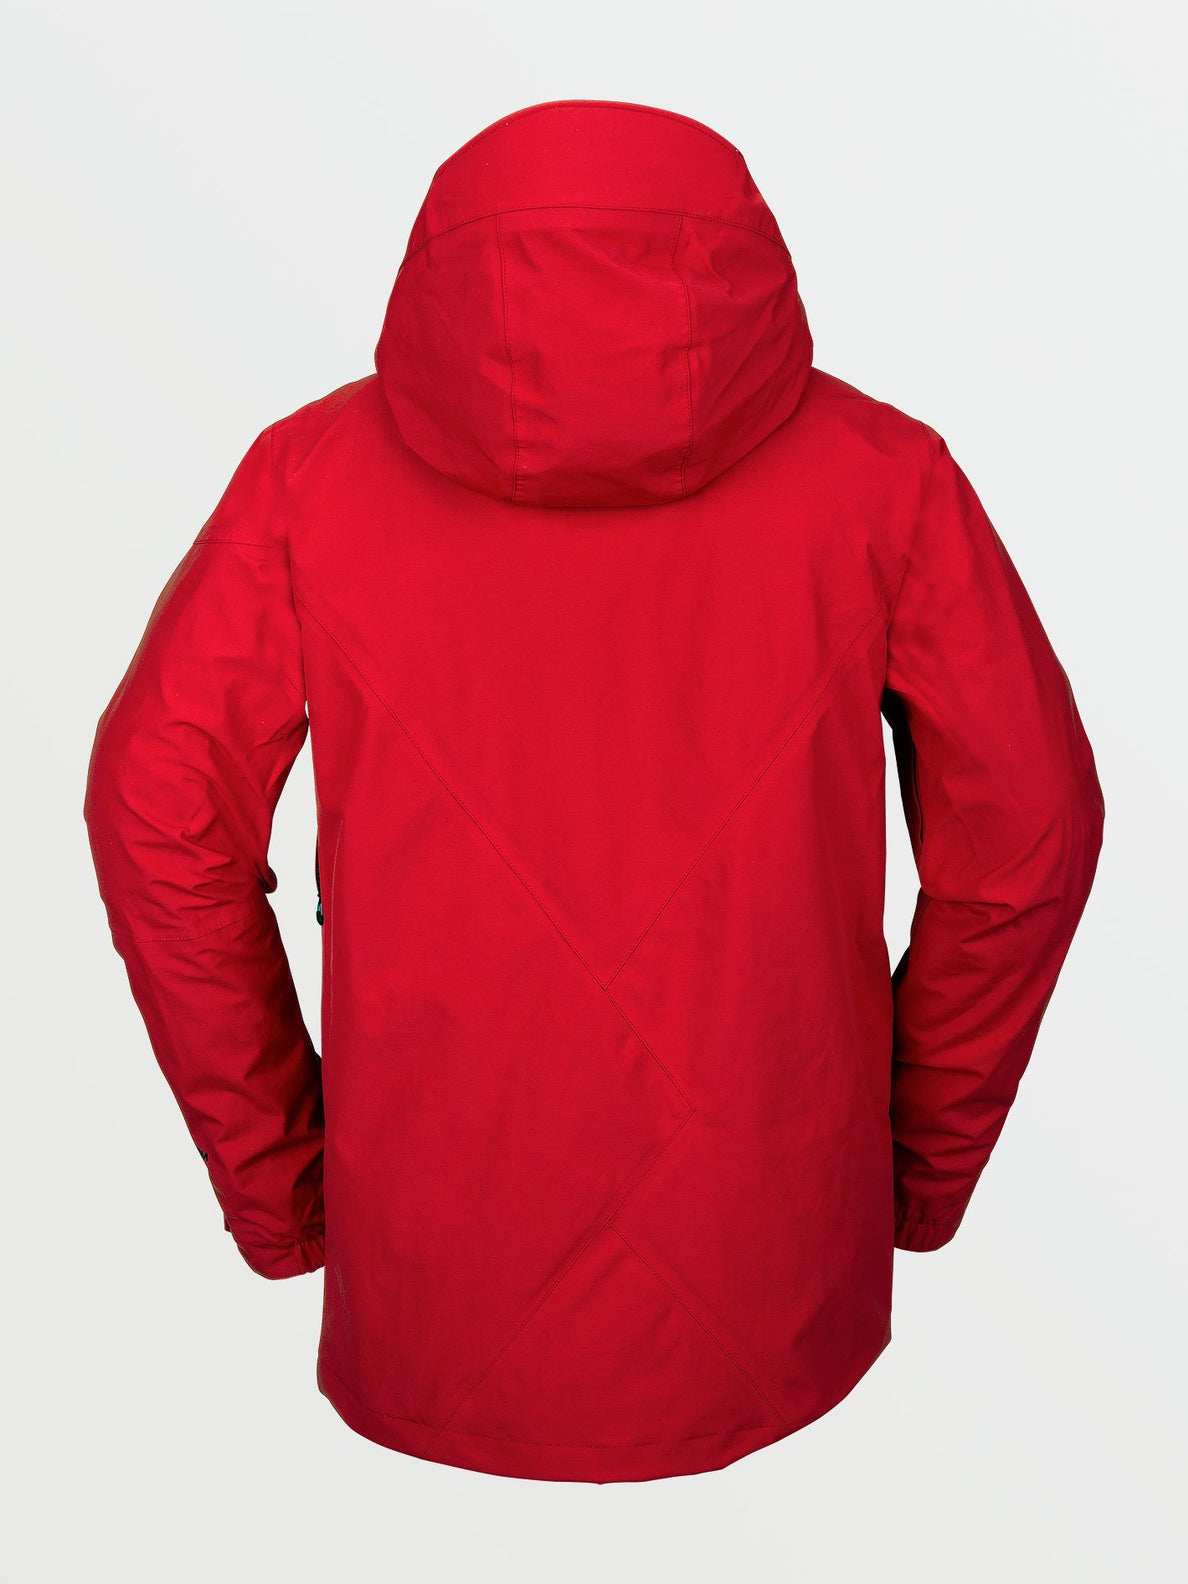 L GORE-TEX Jacket - Red